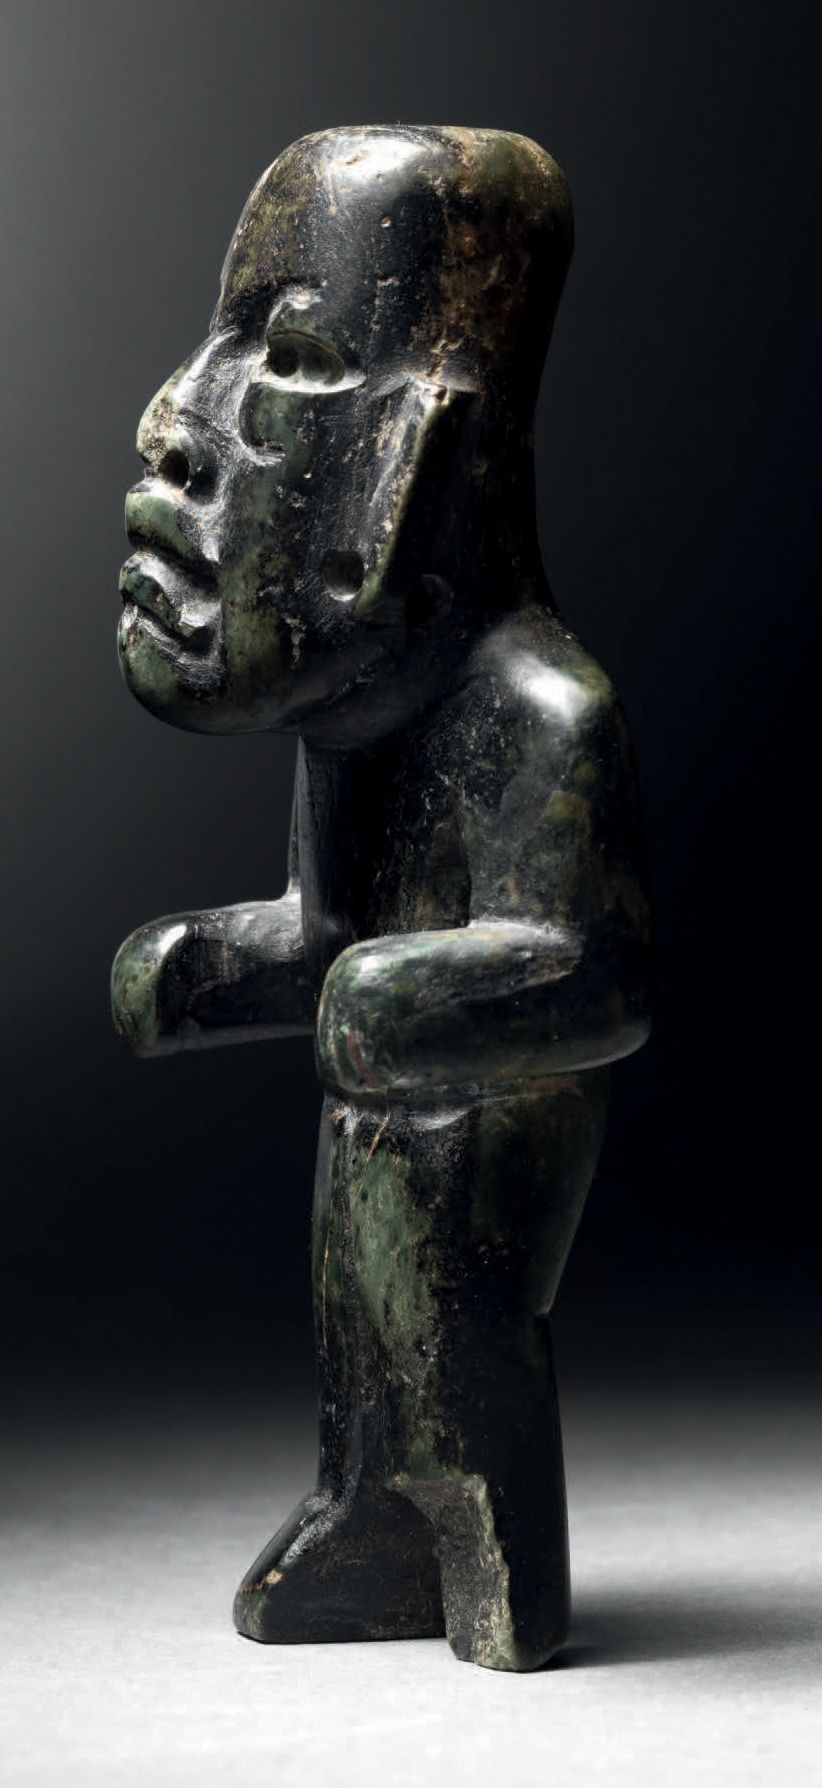 Null Olmec culture, Las Bocas, Mexico
Middle Preclassic, 900-400 B.C.C.
Dark gre&hellip;